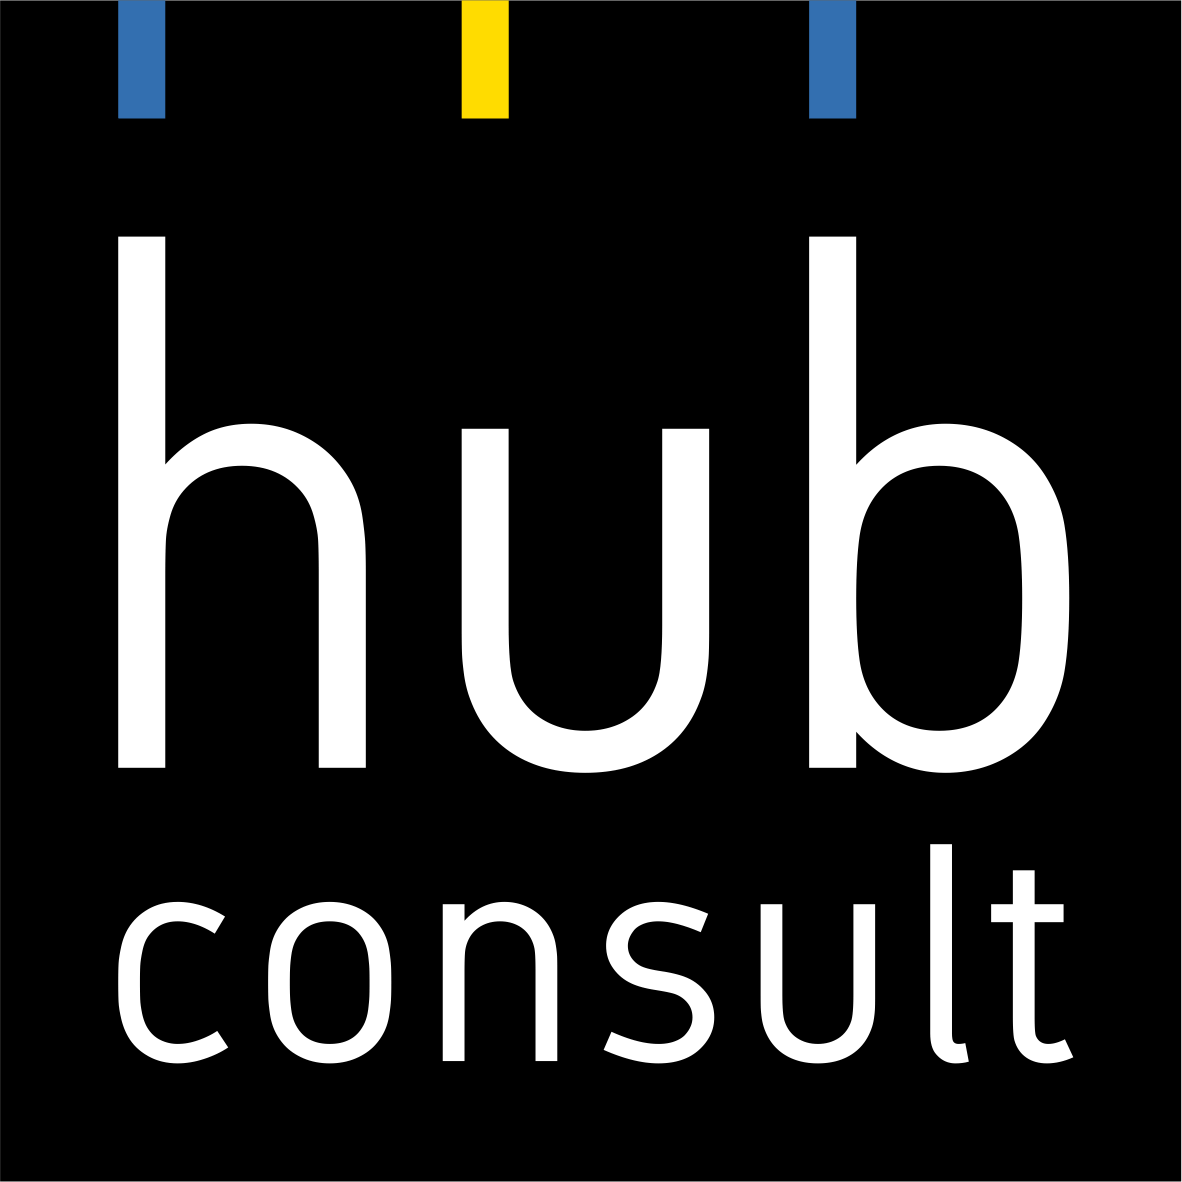 http://hub-consult.de/data/hub-consult-logo_rgb.png